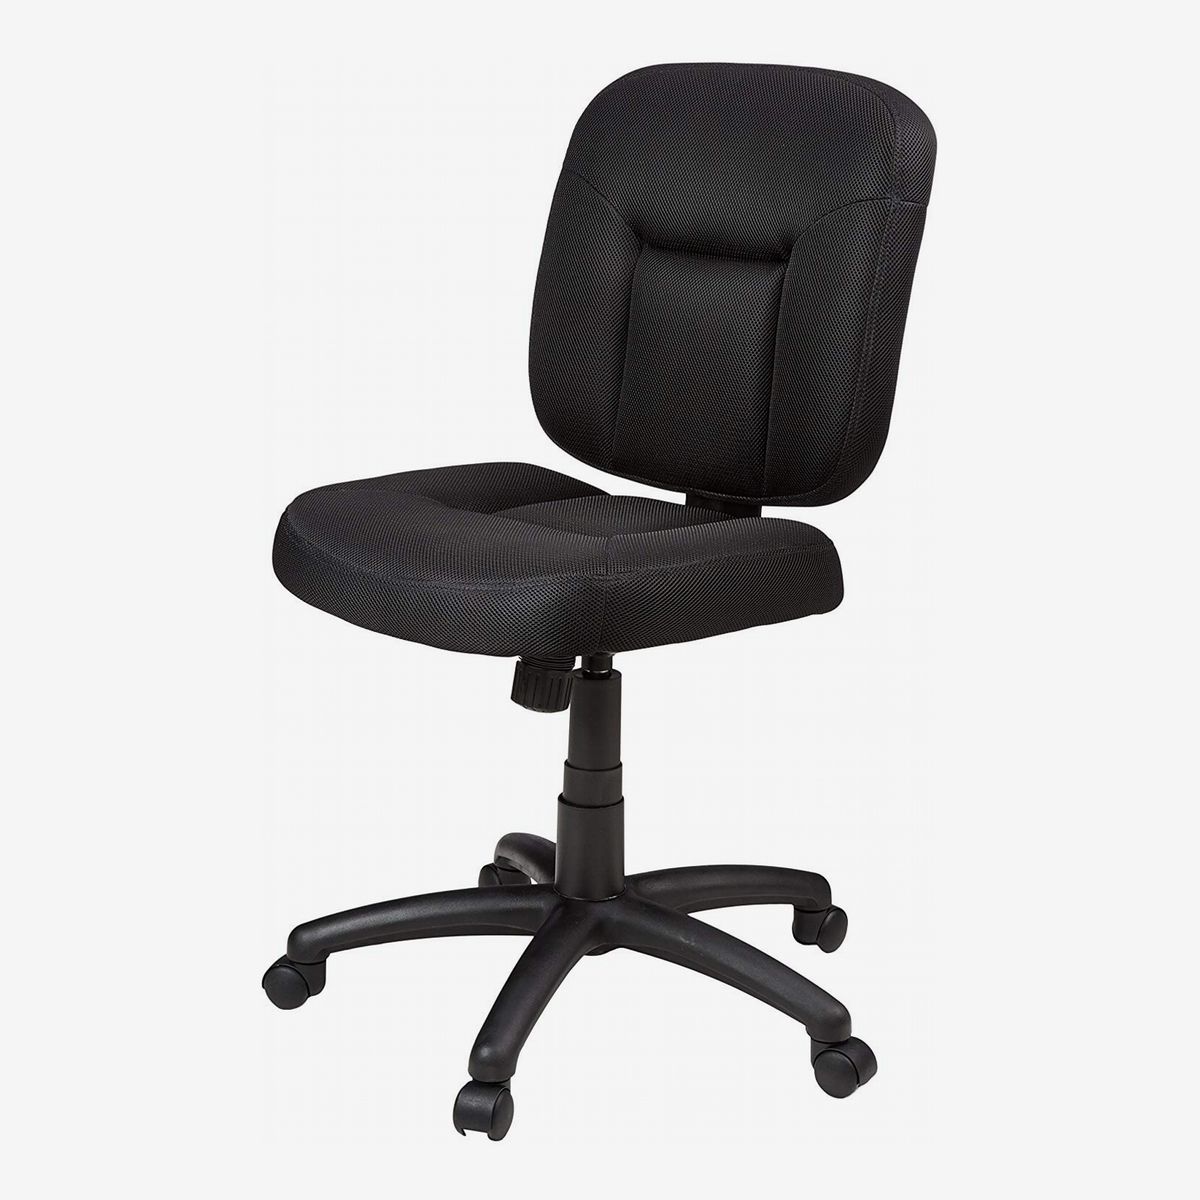 Basics Office Chair /& Foot Rest Black